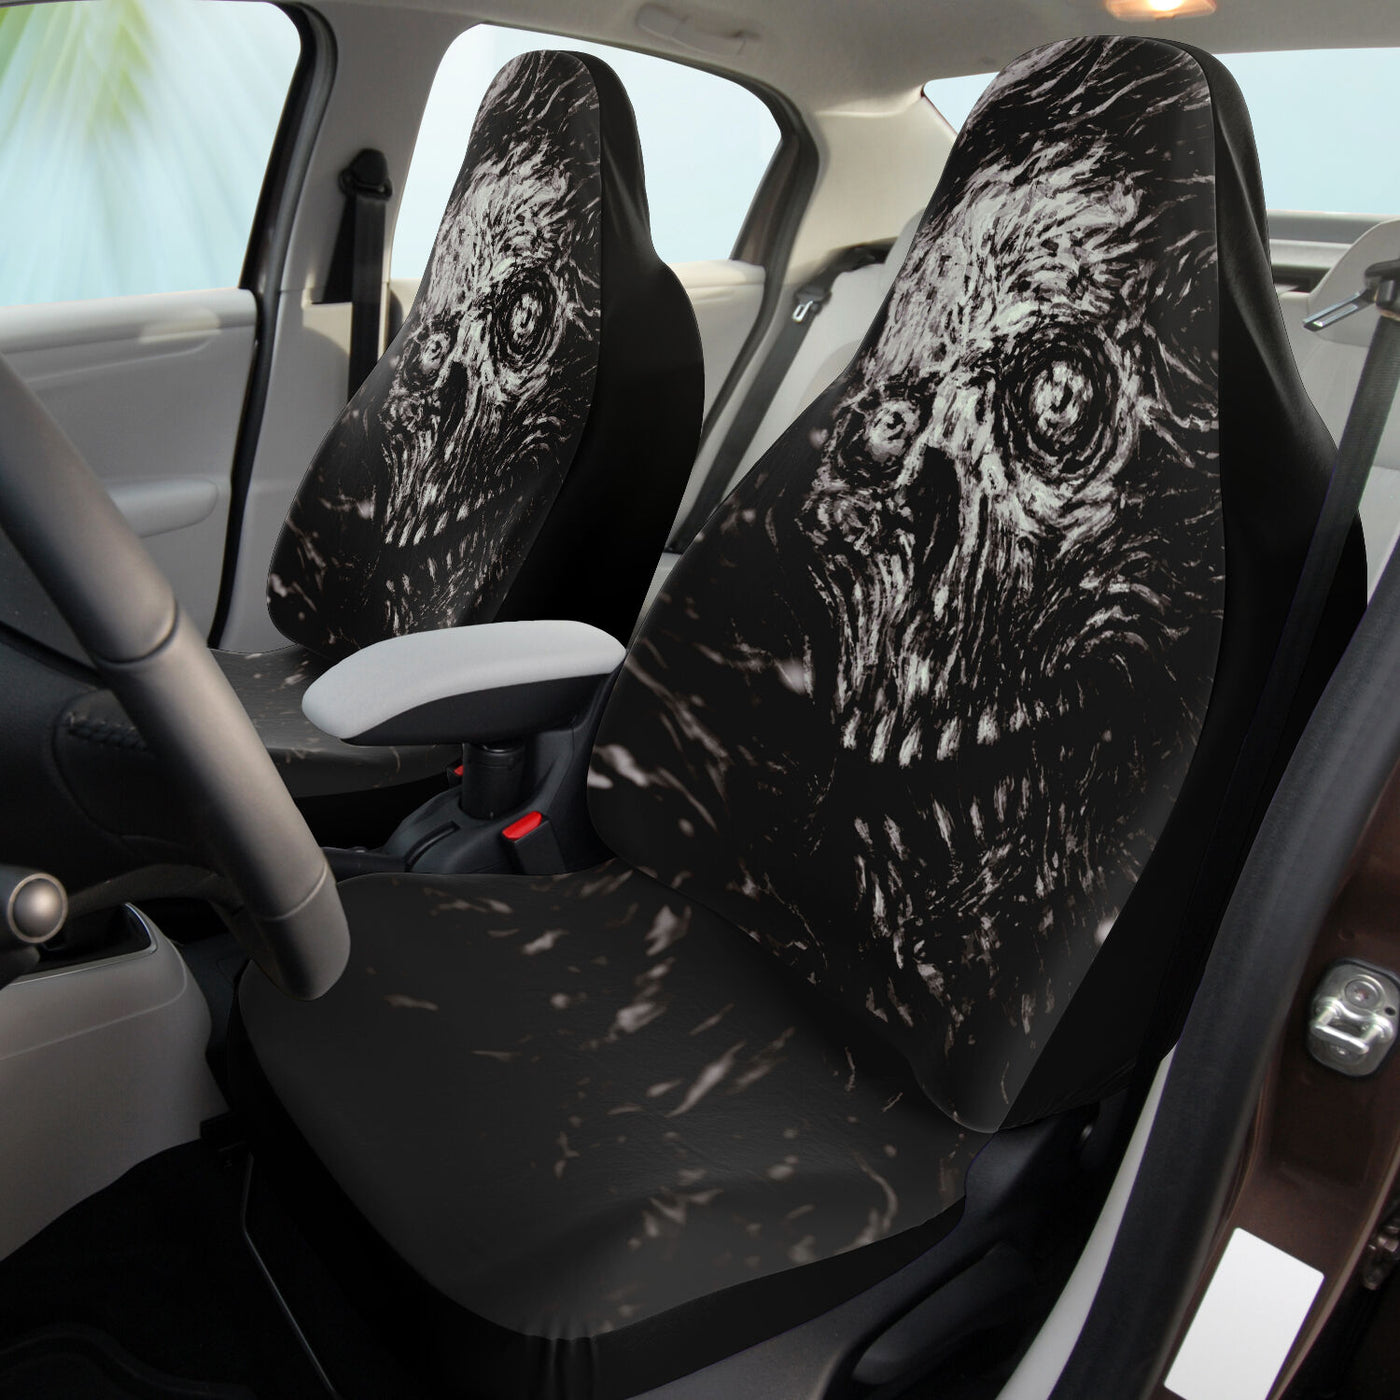 Black Gray Zombie Horror Art | Car Seat Covers